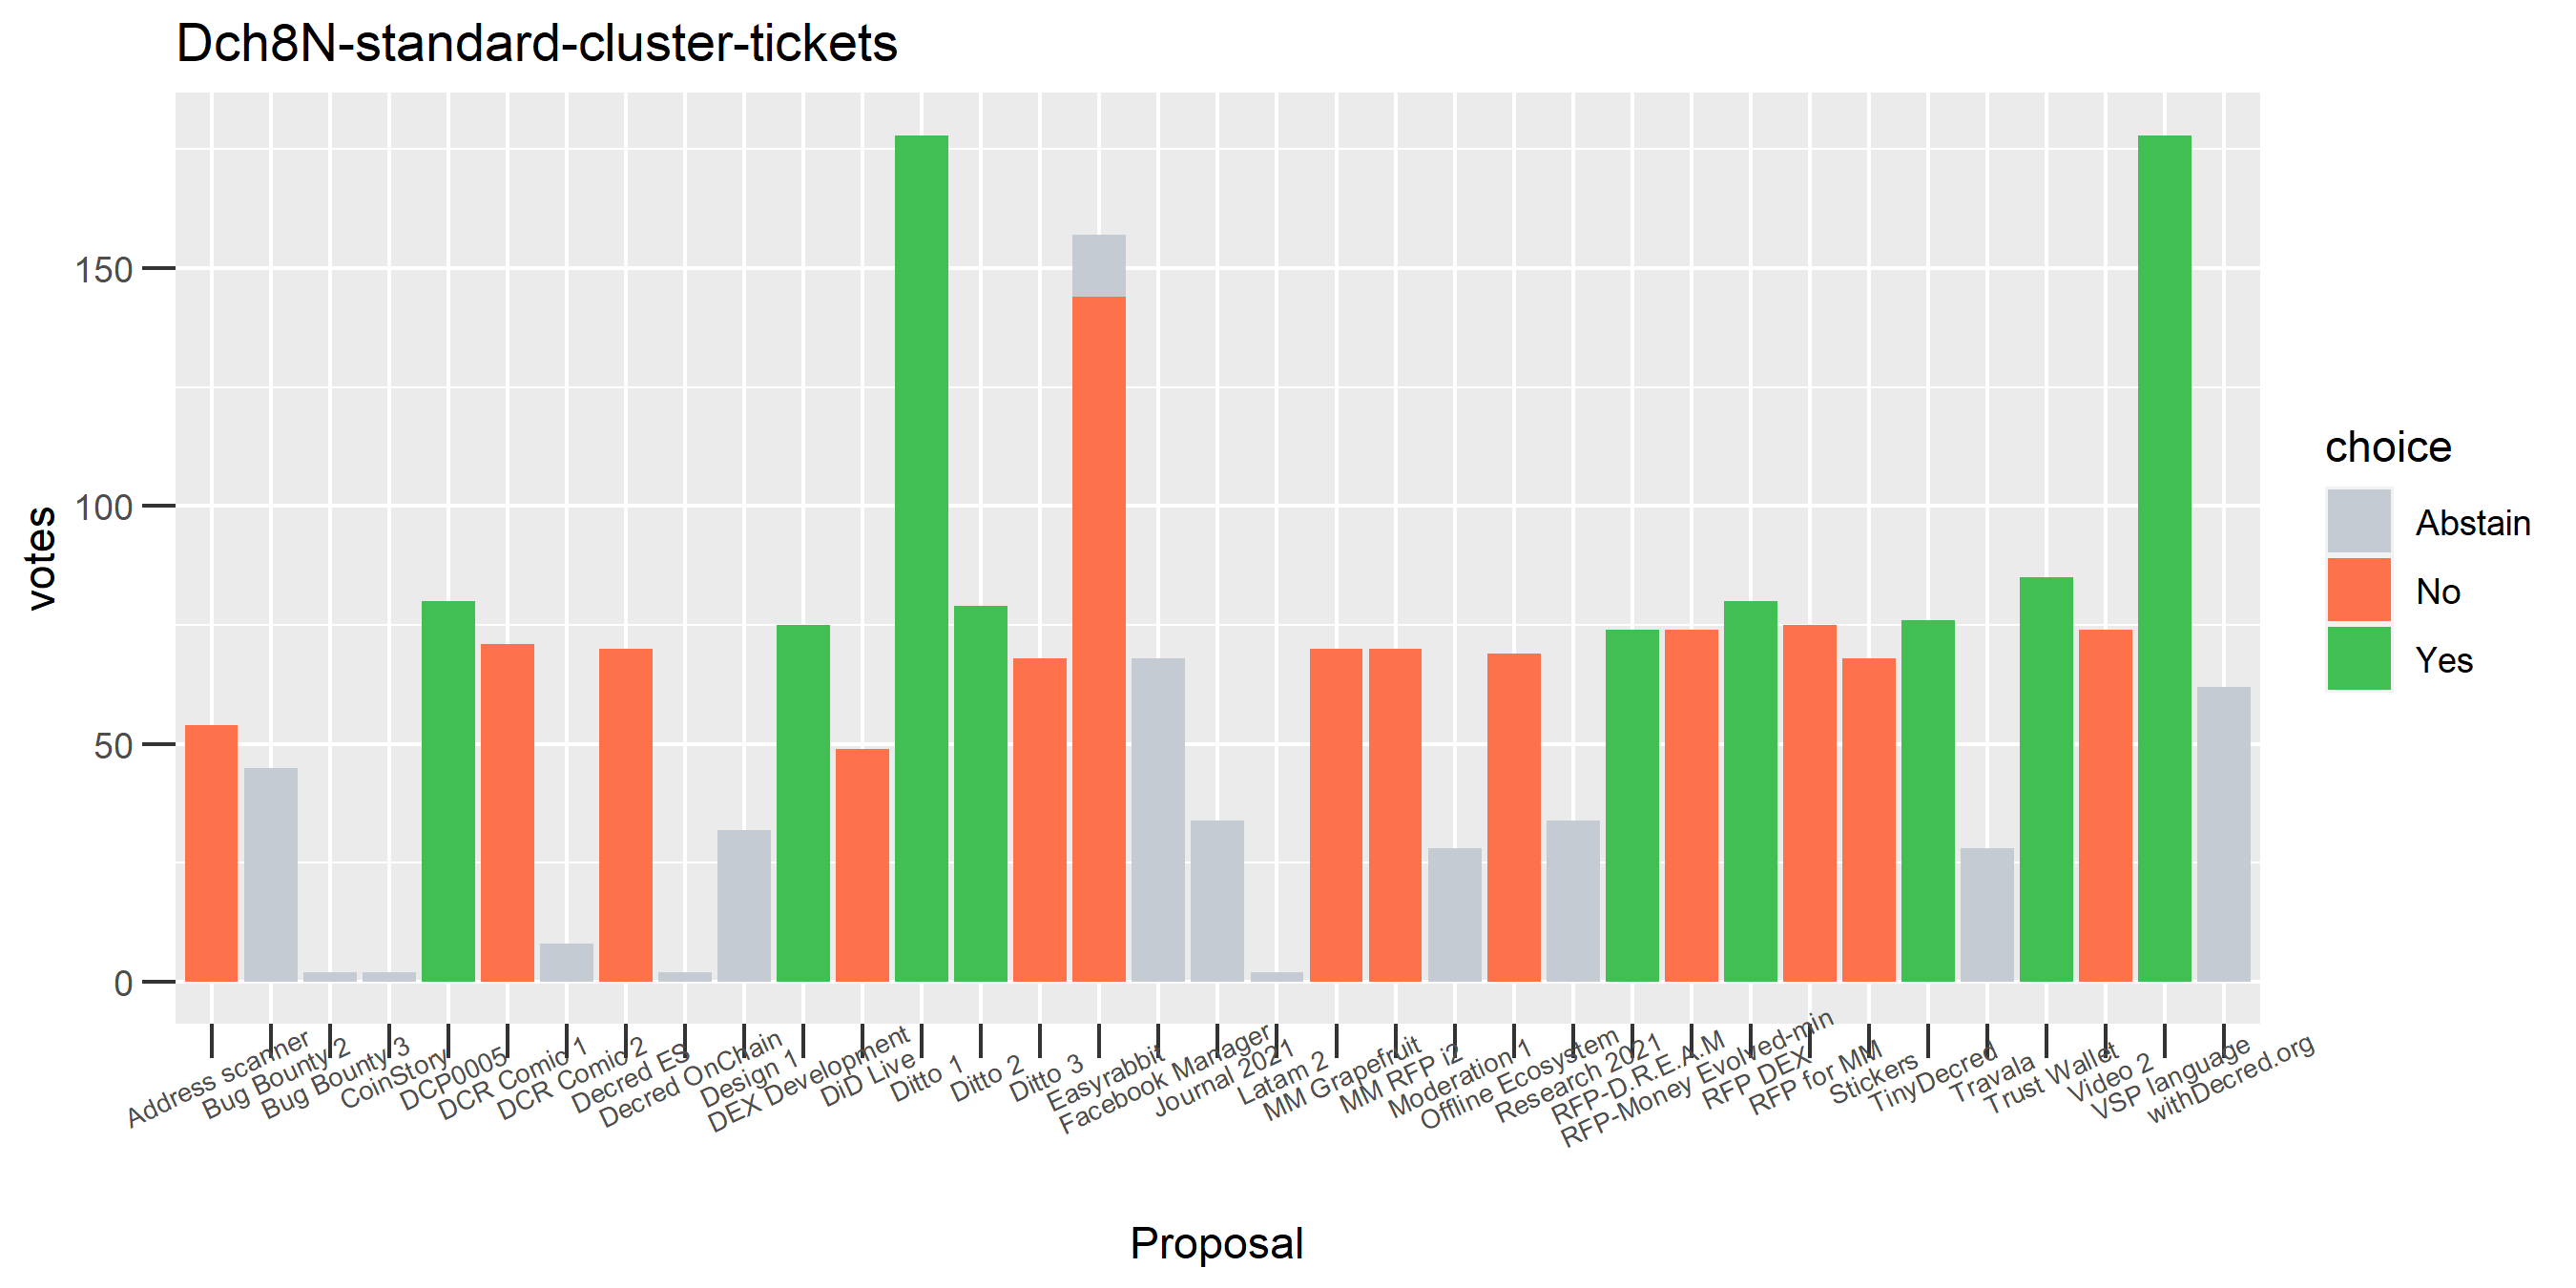 Dch8N-standard-cluster-tickets